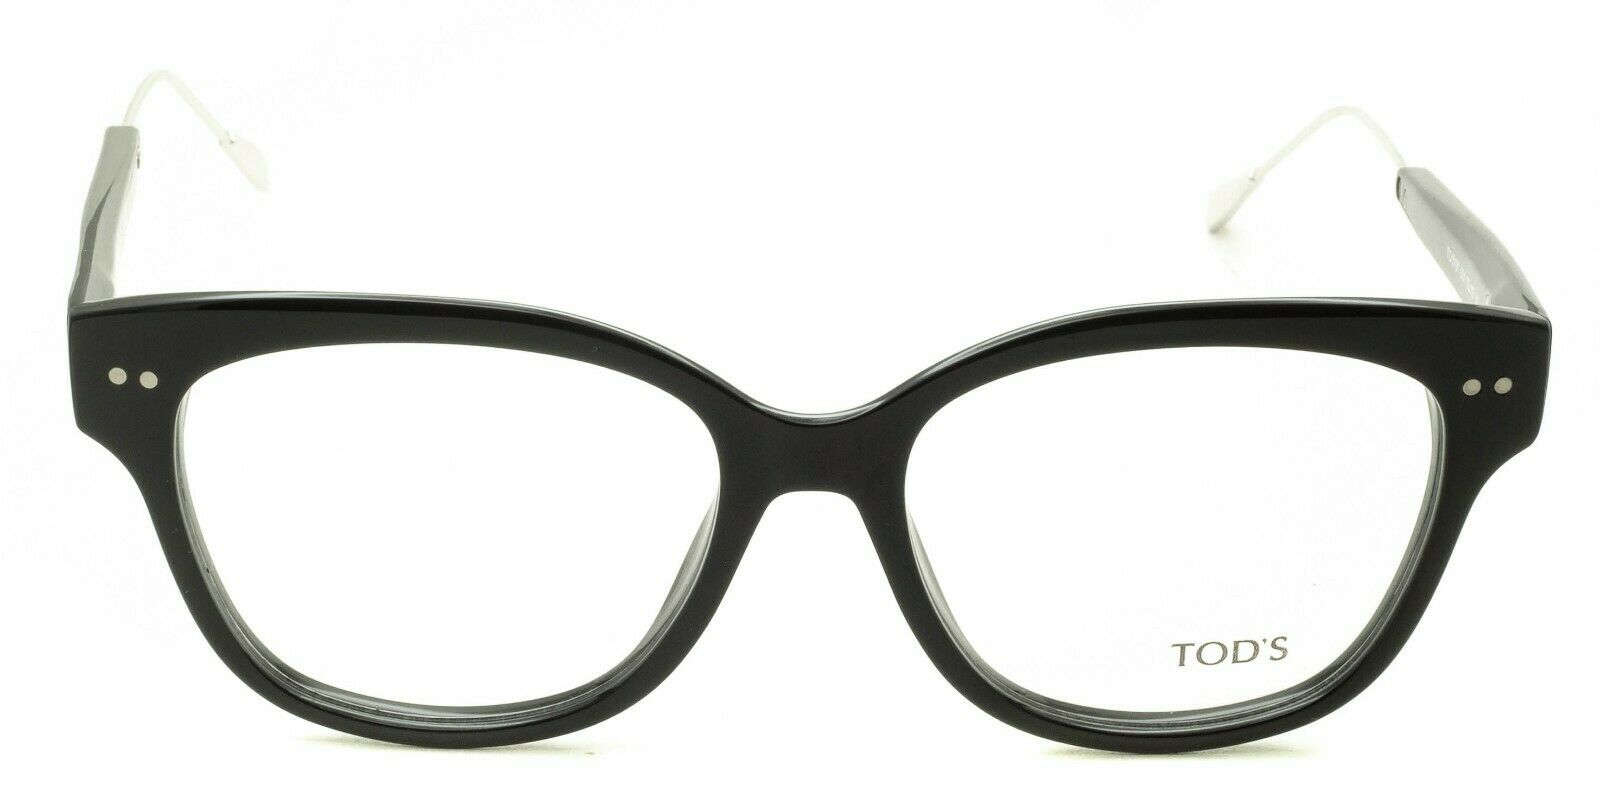 TOD'S TO 5191 001 53mm Eyewear FRAMES Glasses RX Optical Eyeglasses New - Italy